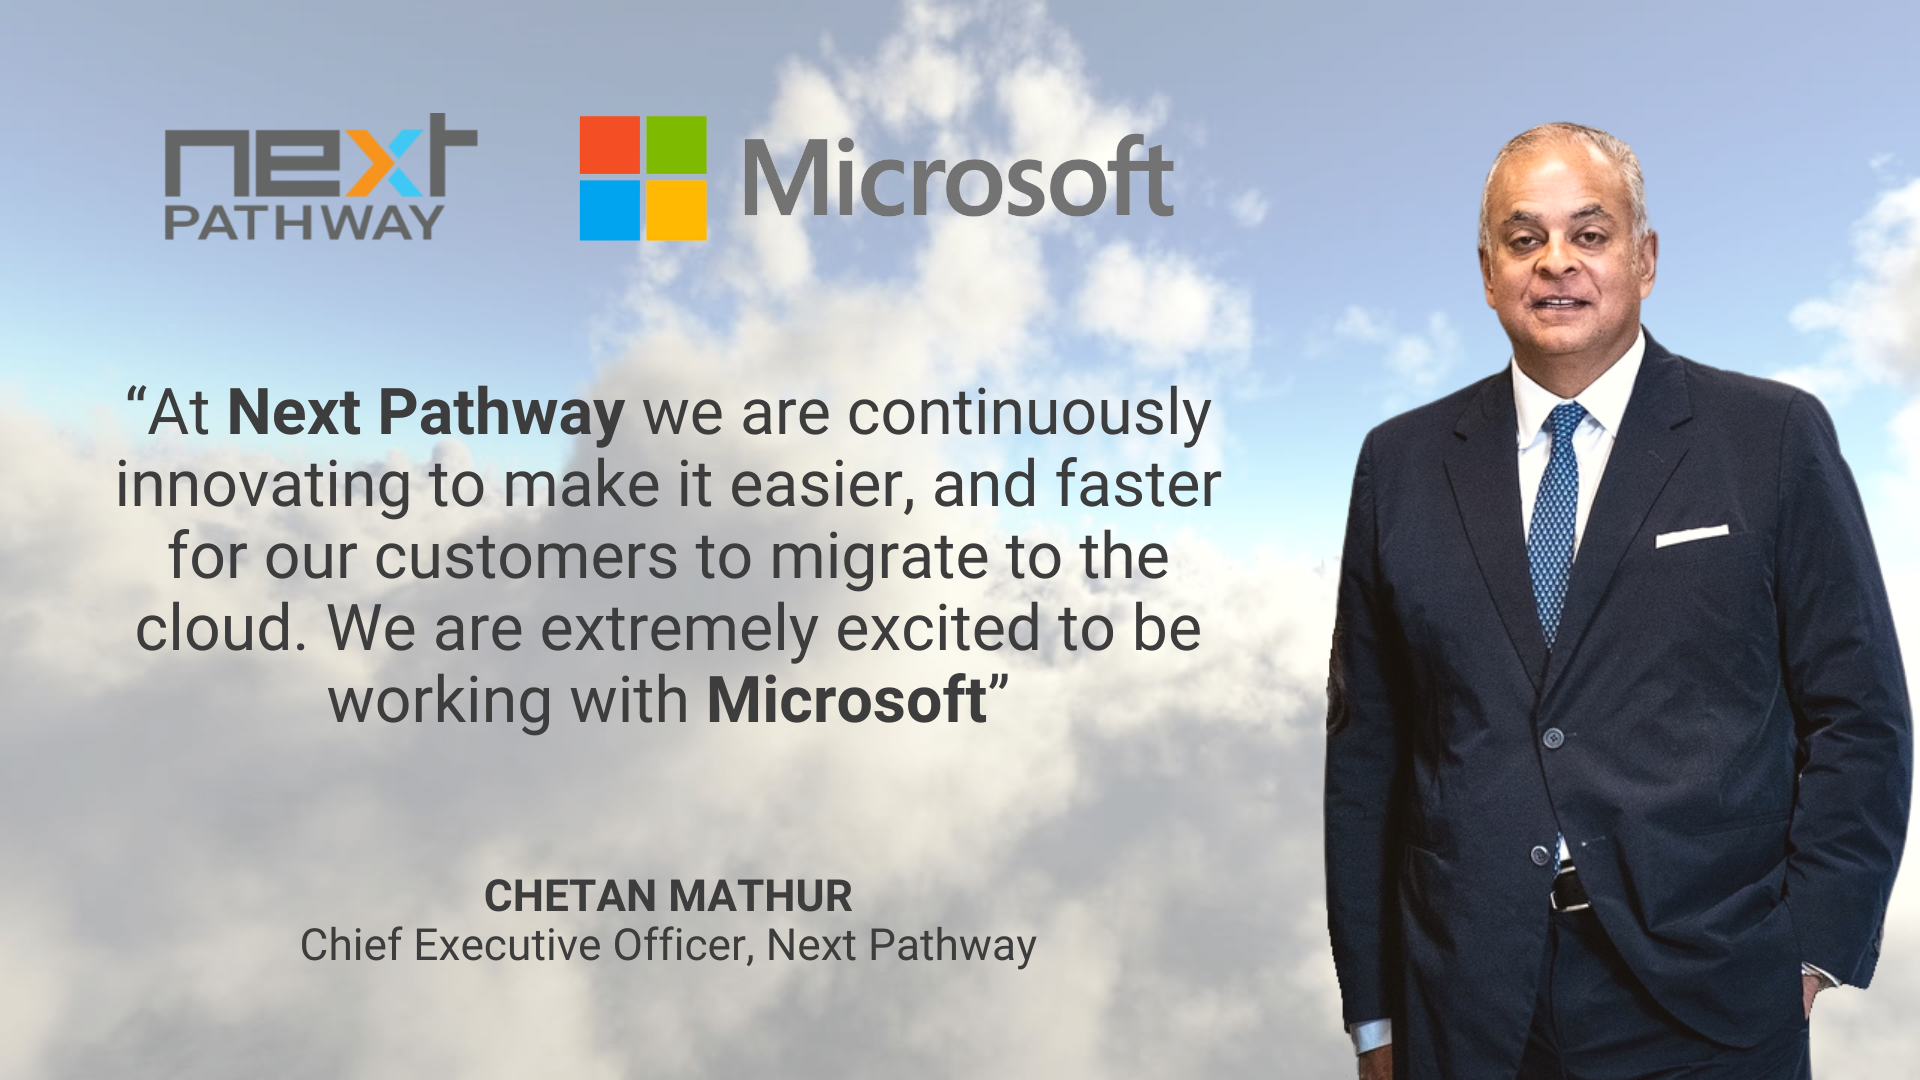 Chetan Mathur on Next Pathway's Collaboration With Microsoft